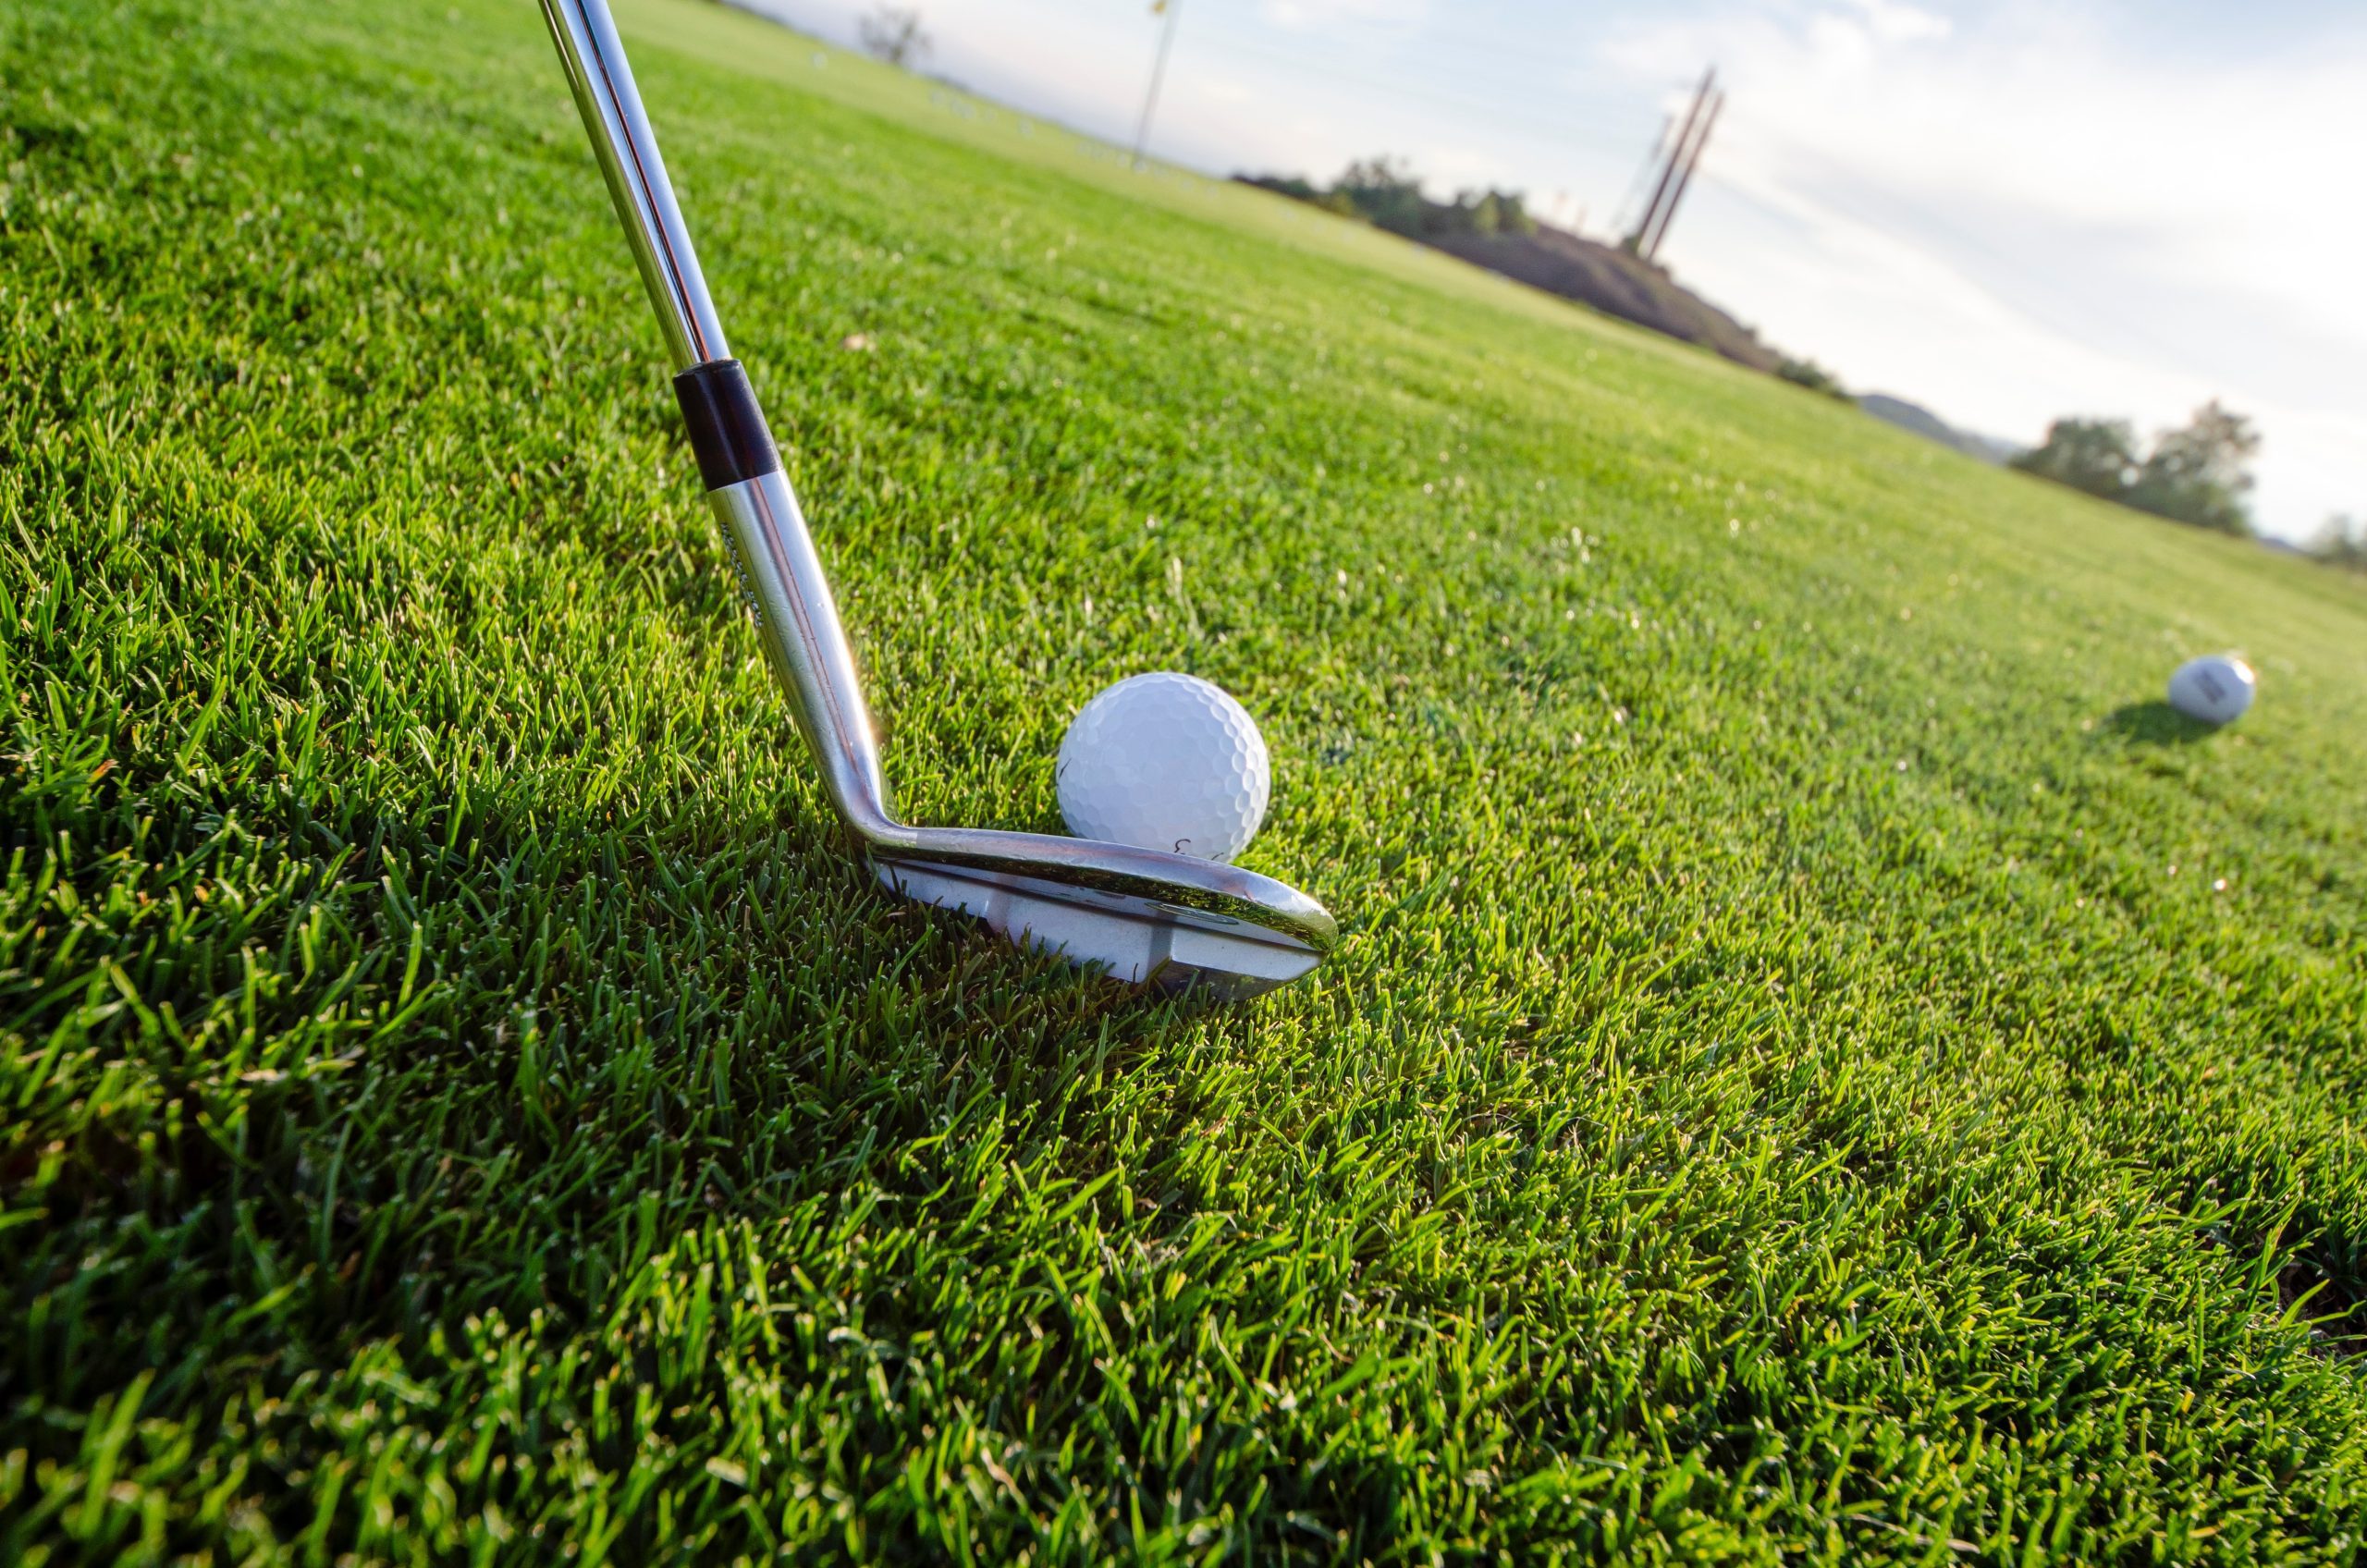 Leçon de golf #2 avec David … on avance !